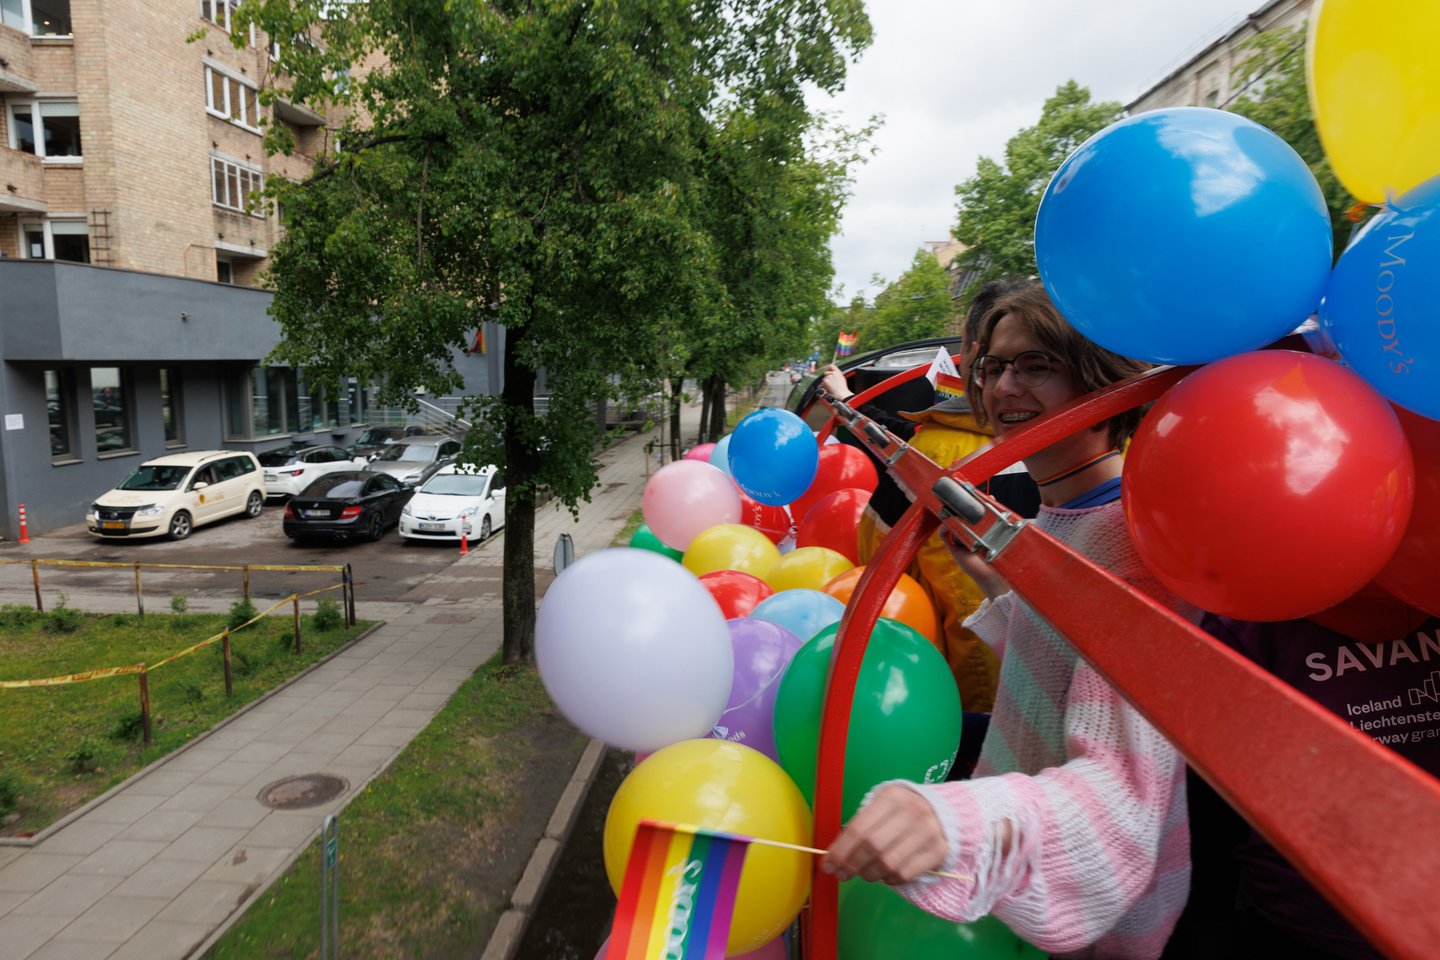 Vilniuje antradienį prasidėjo iki savaitgalio truksiantis „Baltic Pride“ festivalis.<br>T.Bauro nuotr.